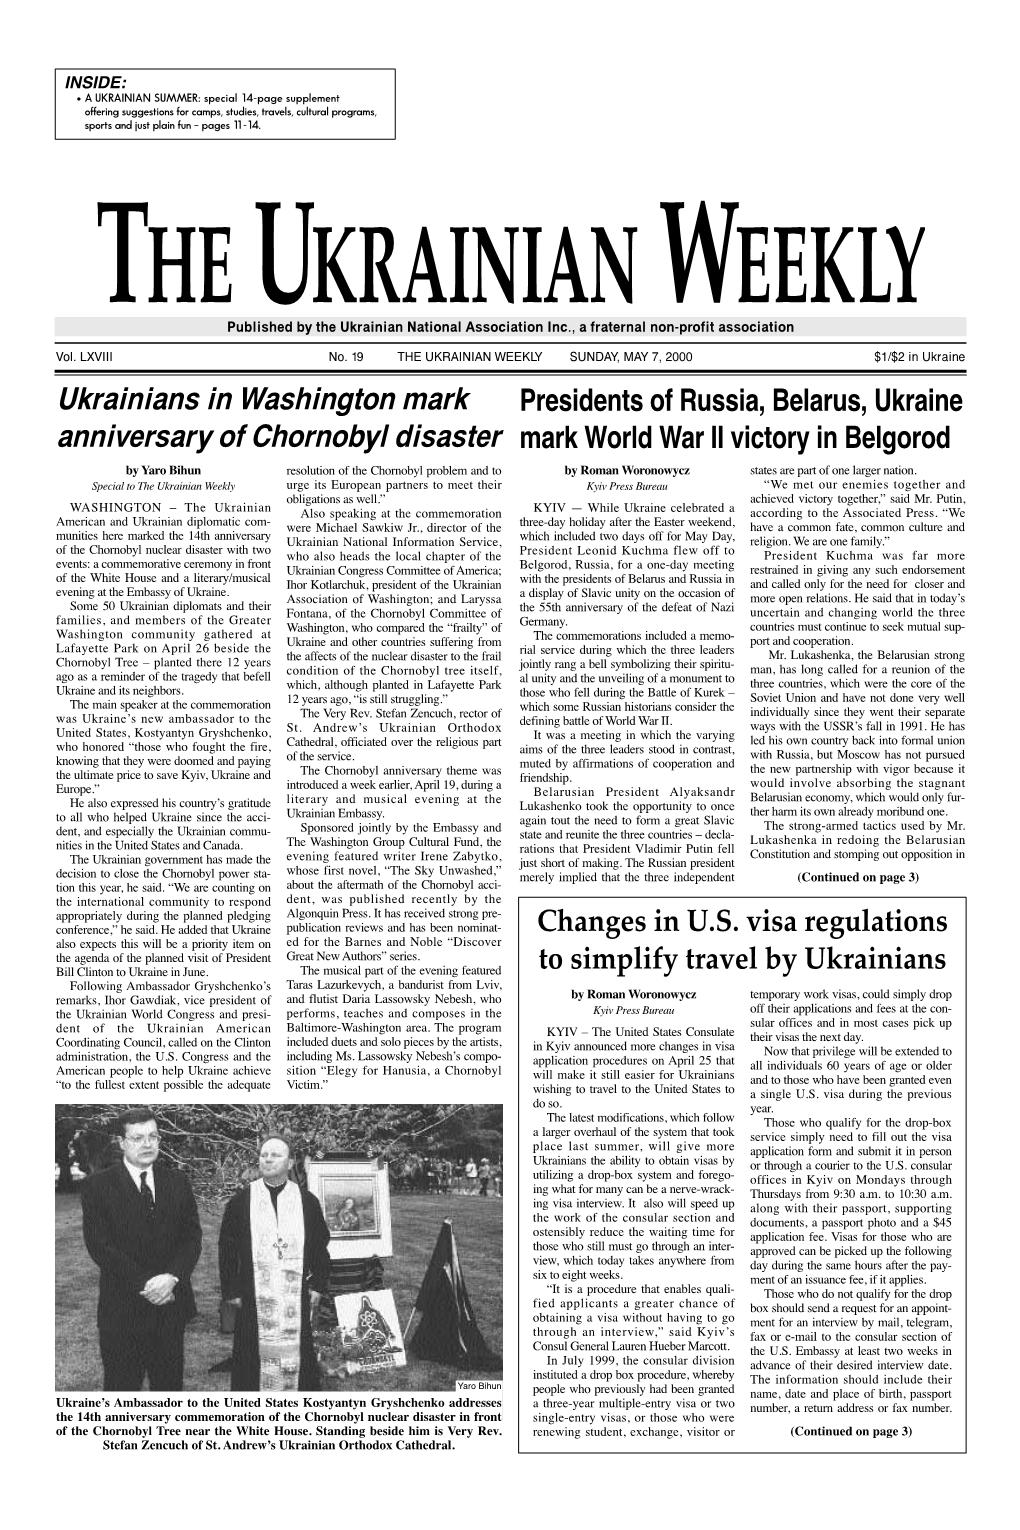 Ukrainians in Washington Mark Anniversary of Chornobyl Disaster Presidents of Russia, Belarus, Ukraine Mark World War II Victory